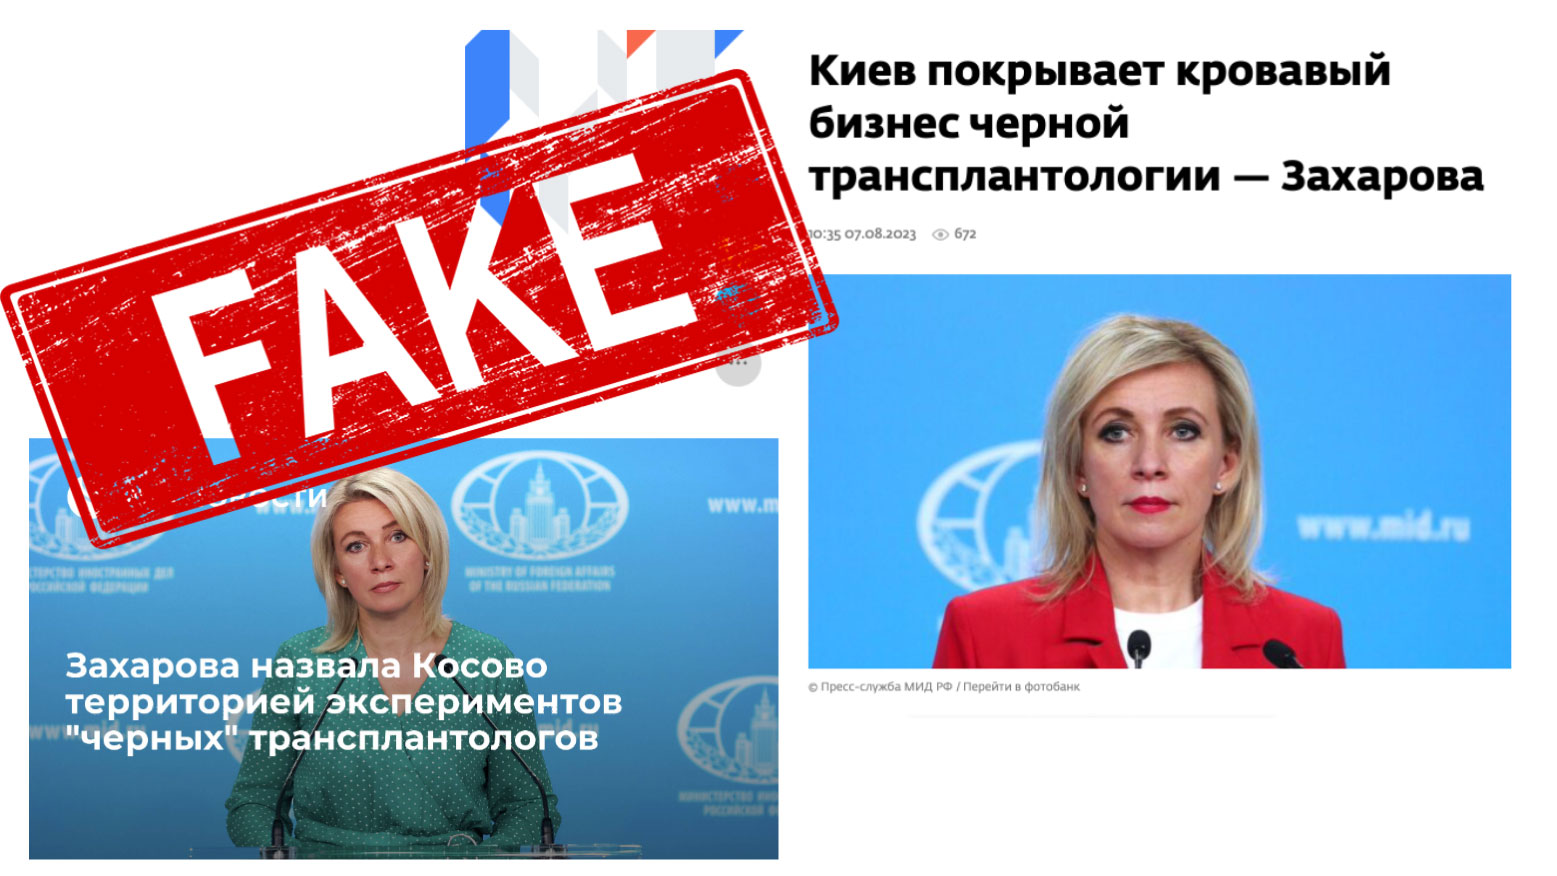 MFA Russia’s spox once again spreading fake news on Ukraine